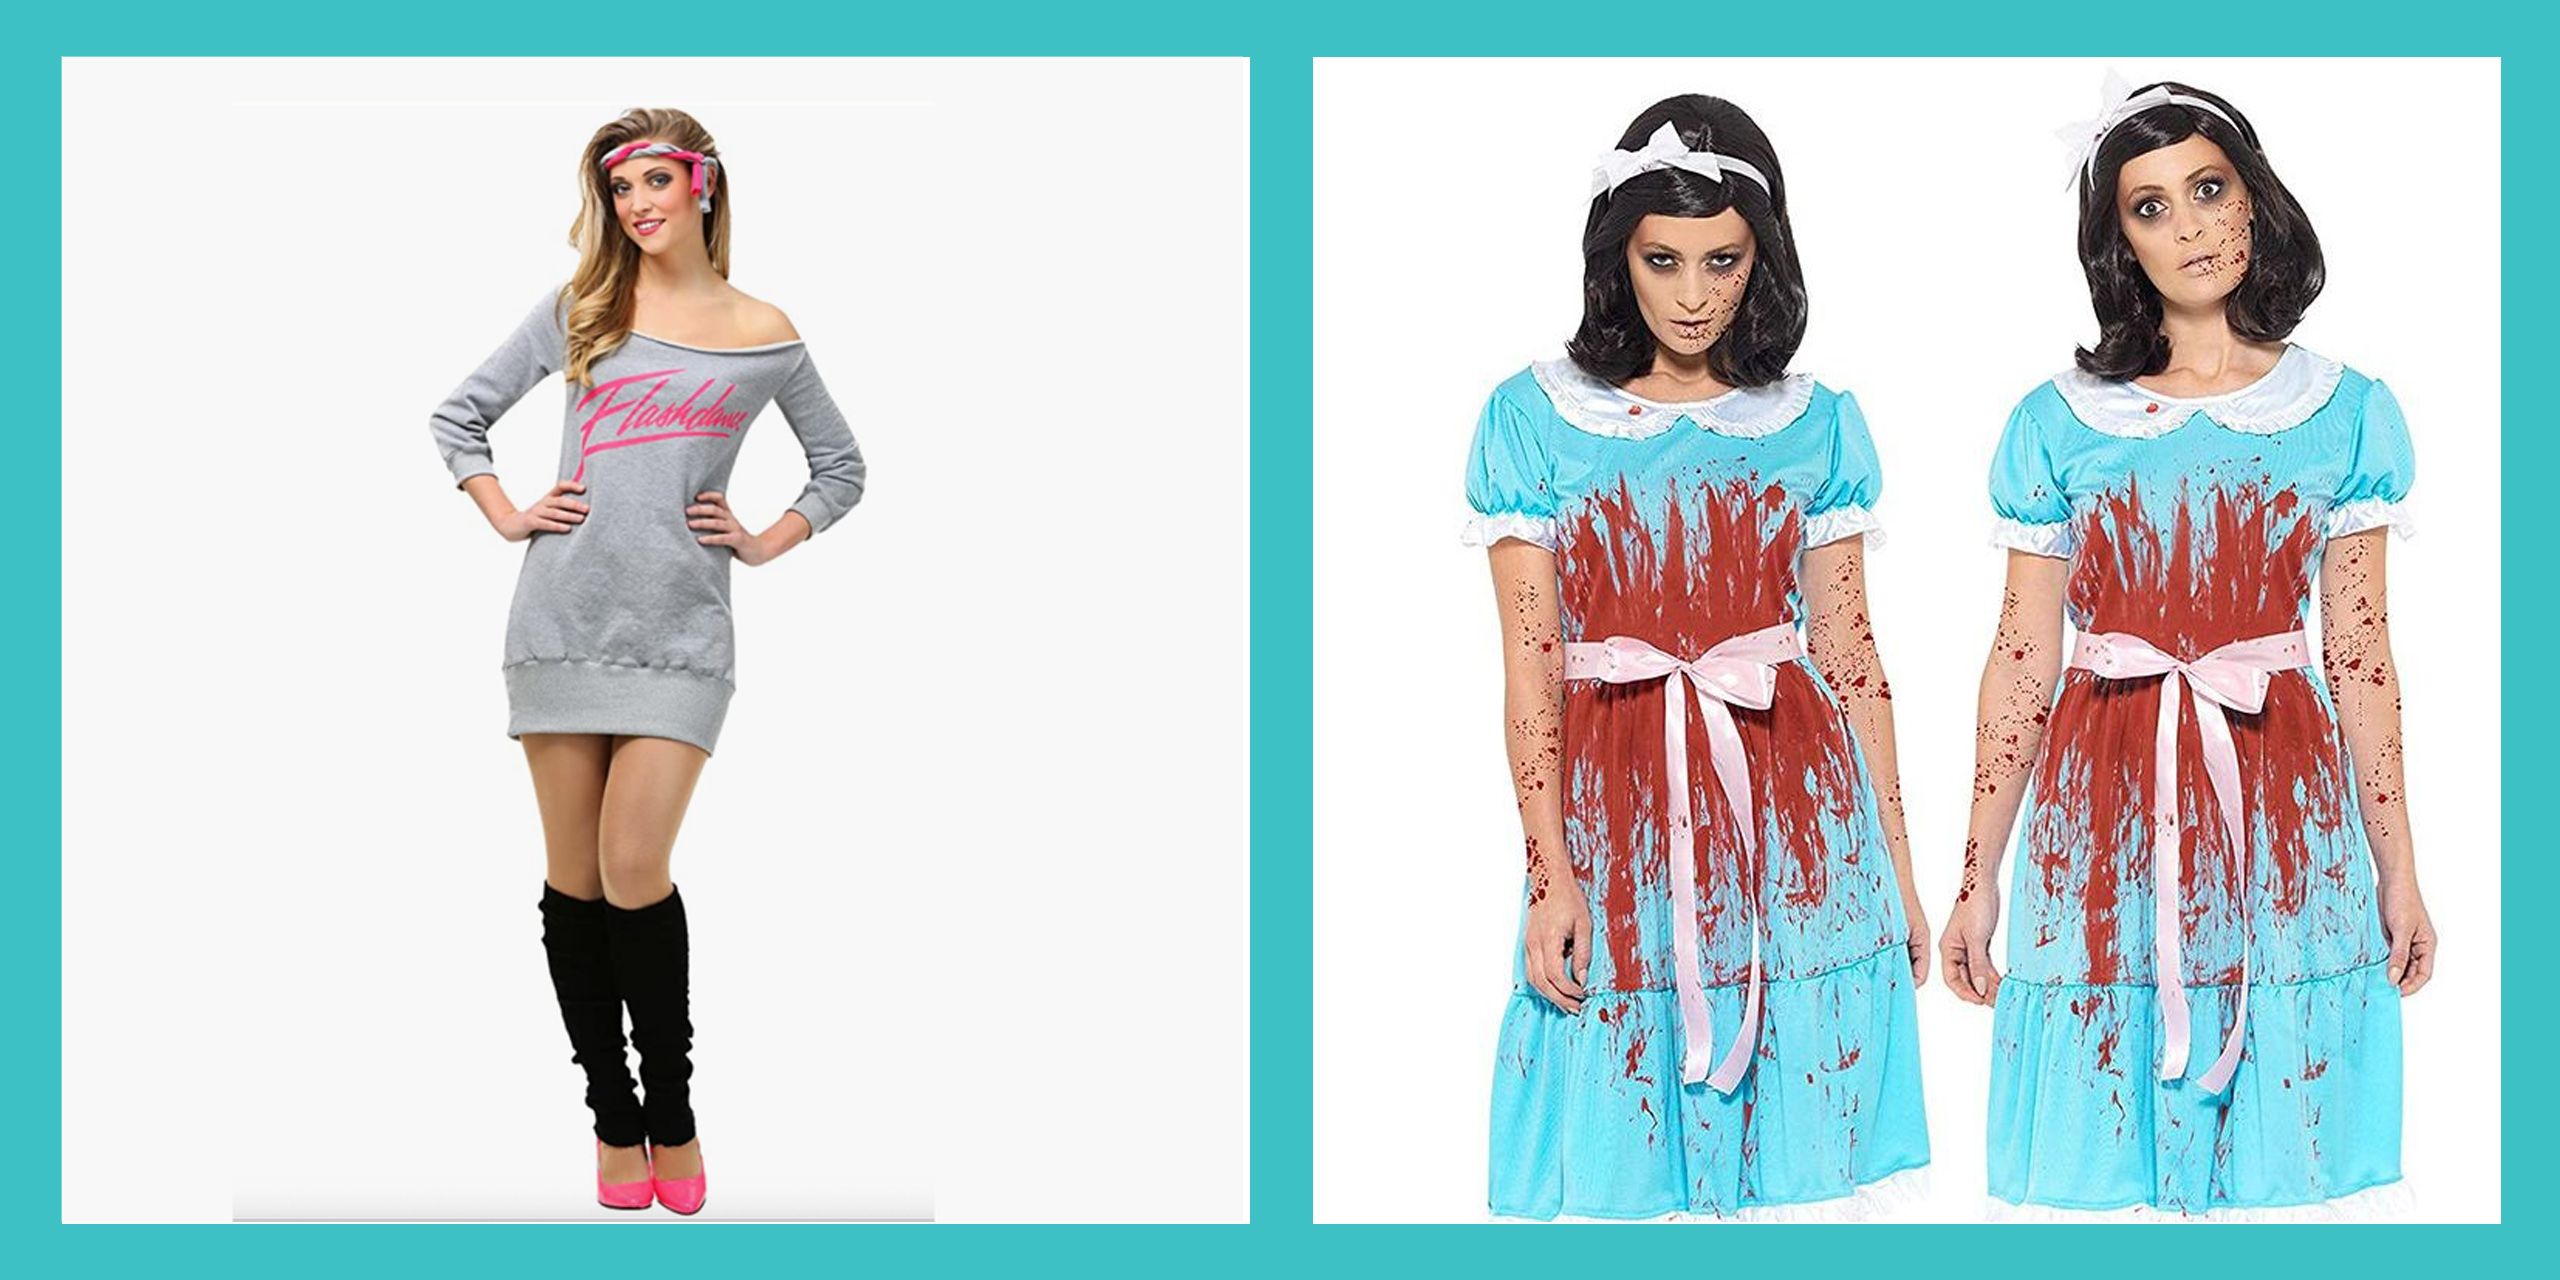 80s costume ideas for women. Best days 80s ideas  80s party costumes, 80s  party outfits, 80s theme party outfits